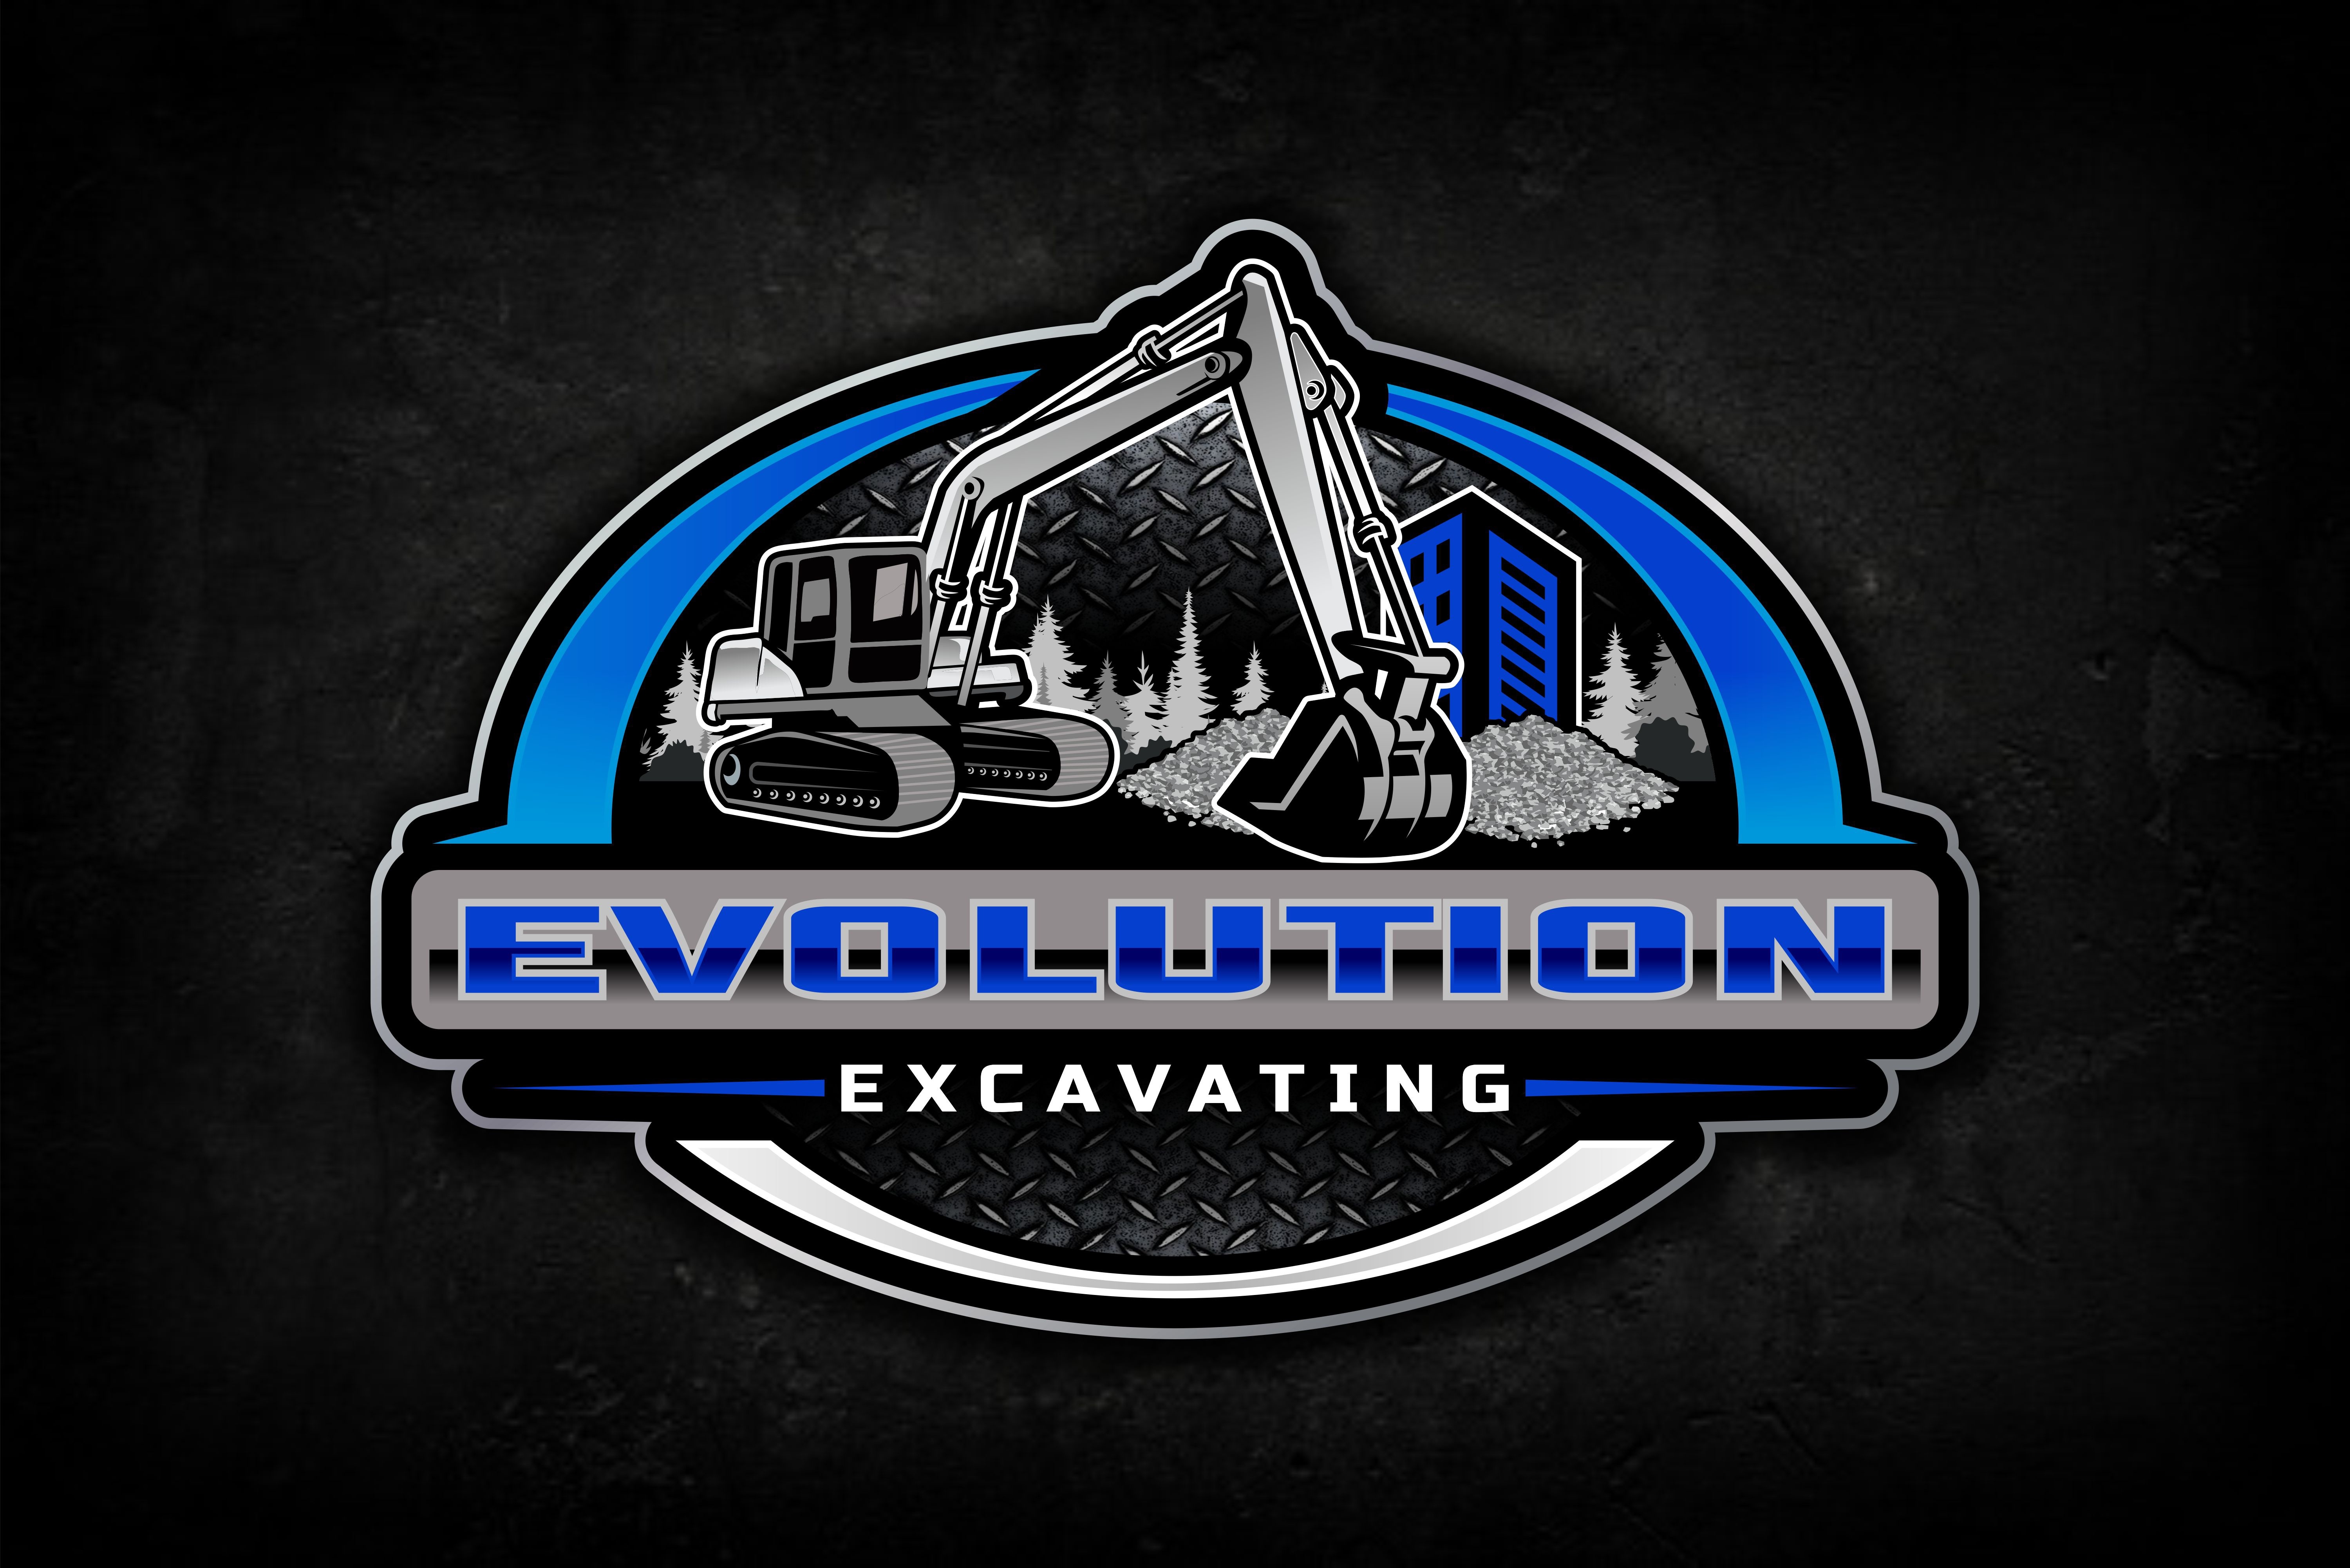 Evolution Excavating's logo